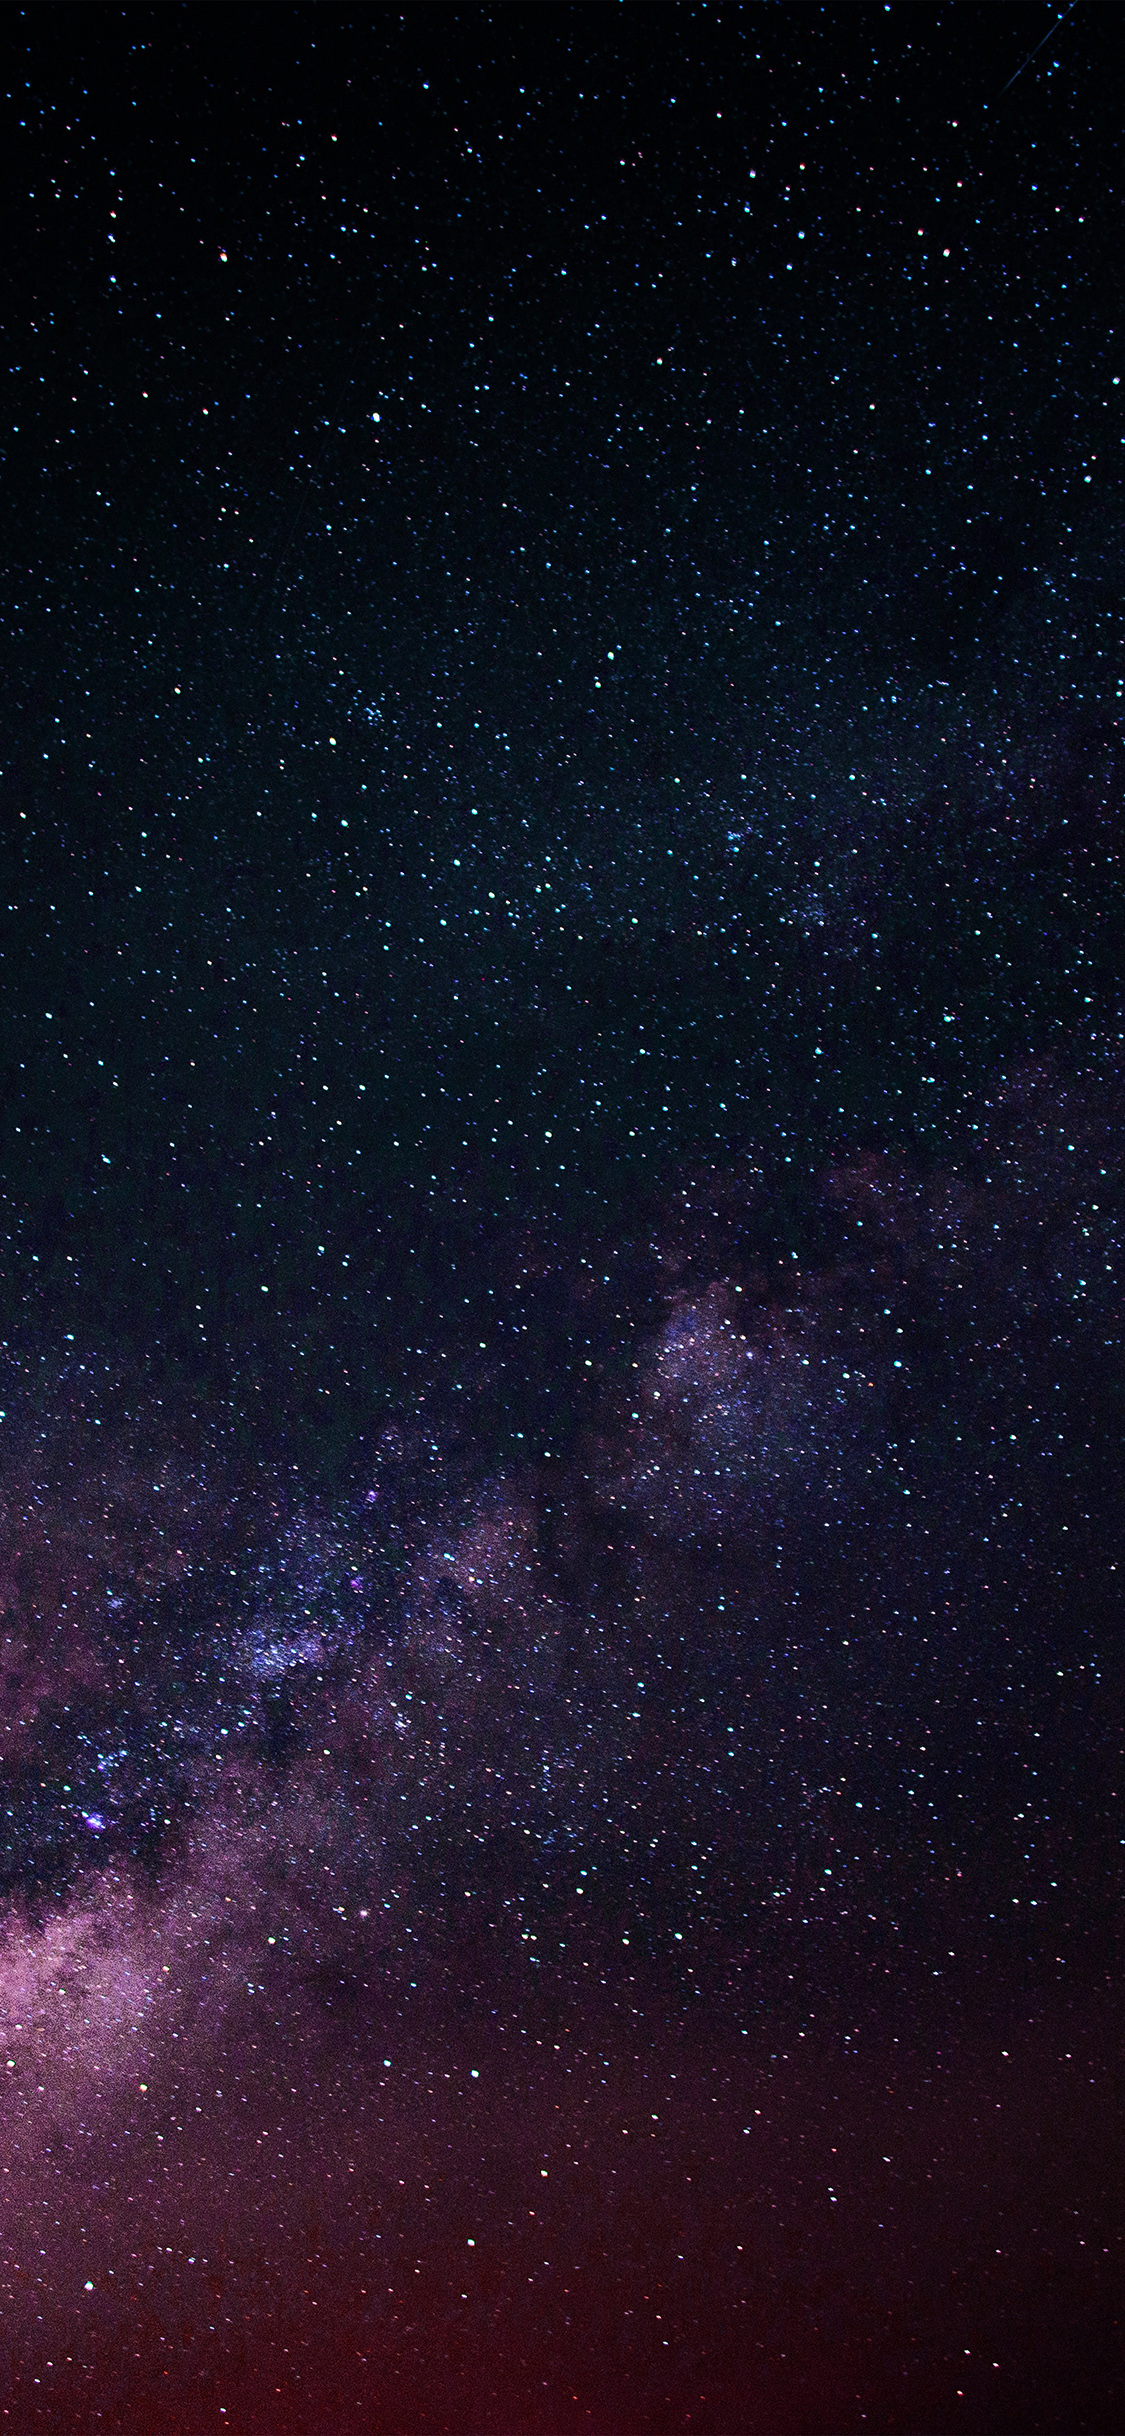 iPhone X wallpaper. space star night galaxy nature dark milkyway